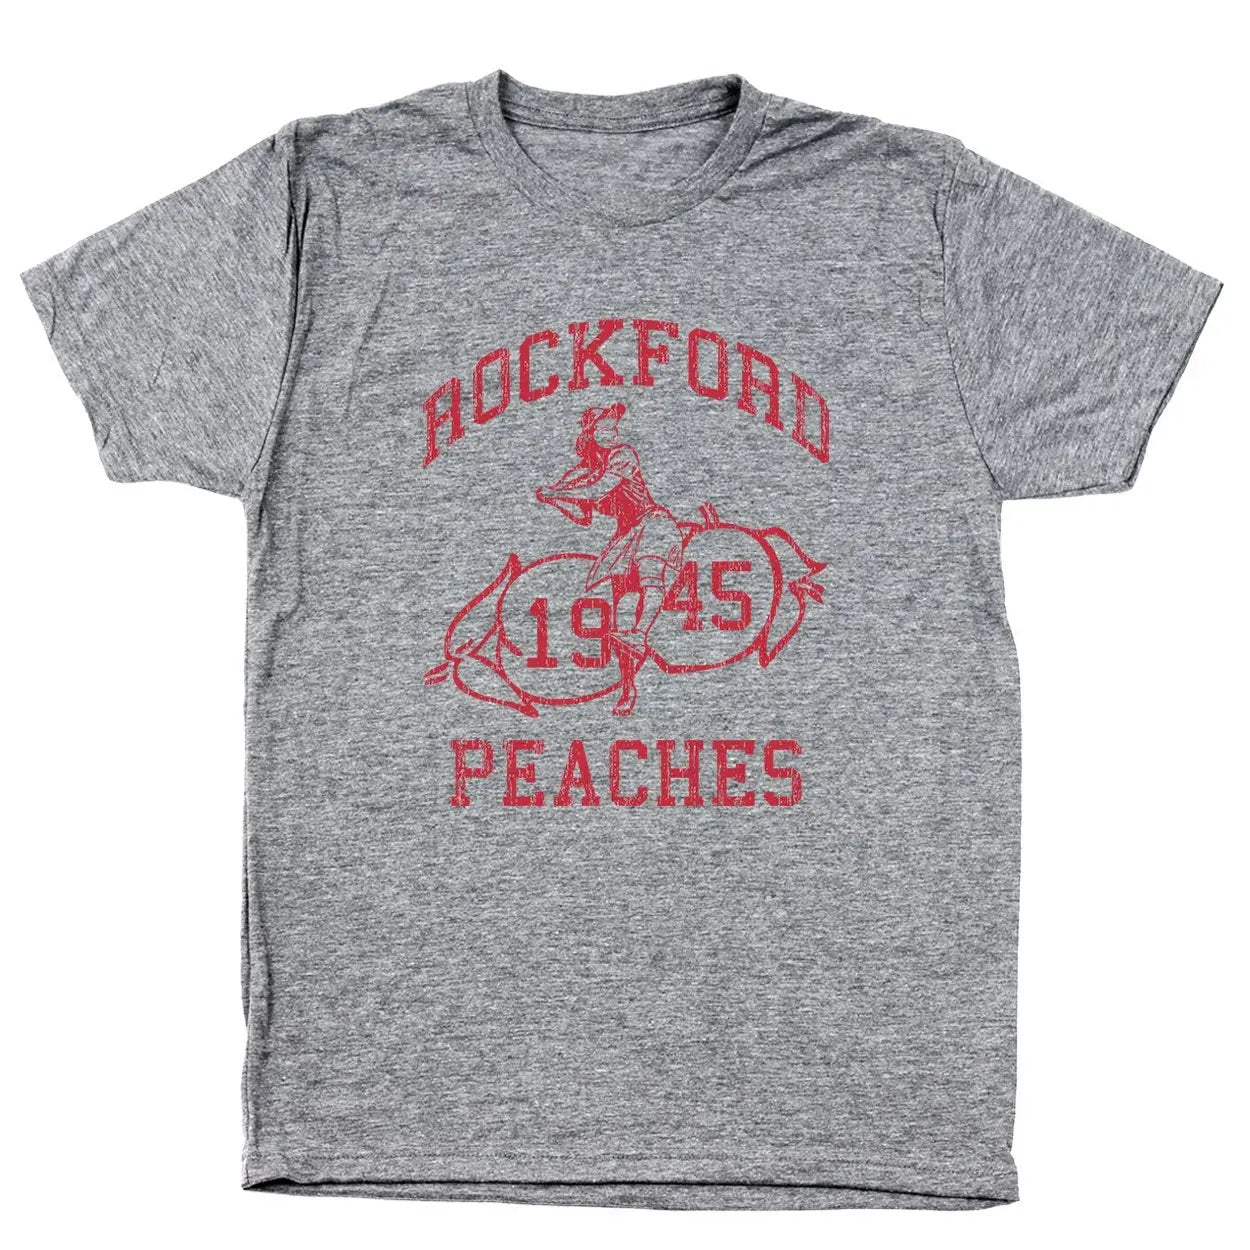 Rockford Peaches Tshirt - Donkey Tees